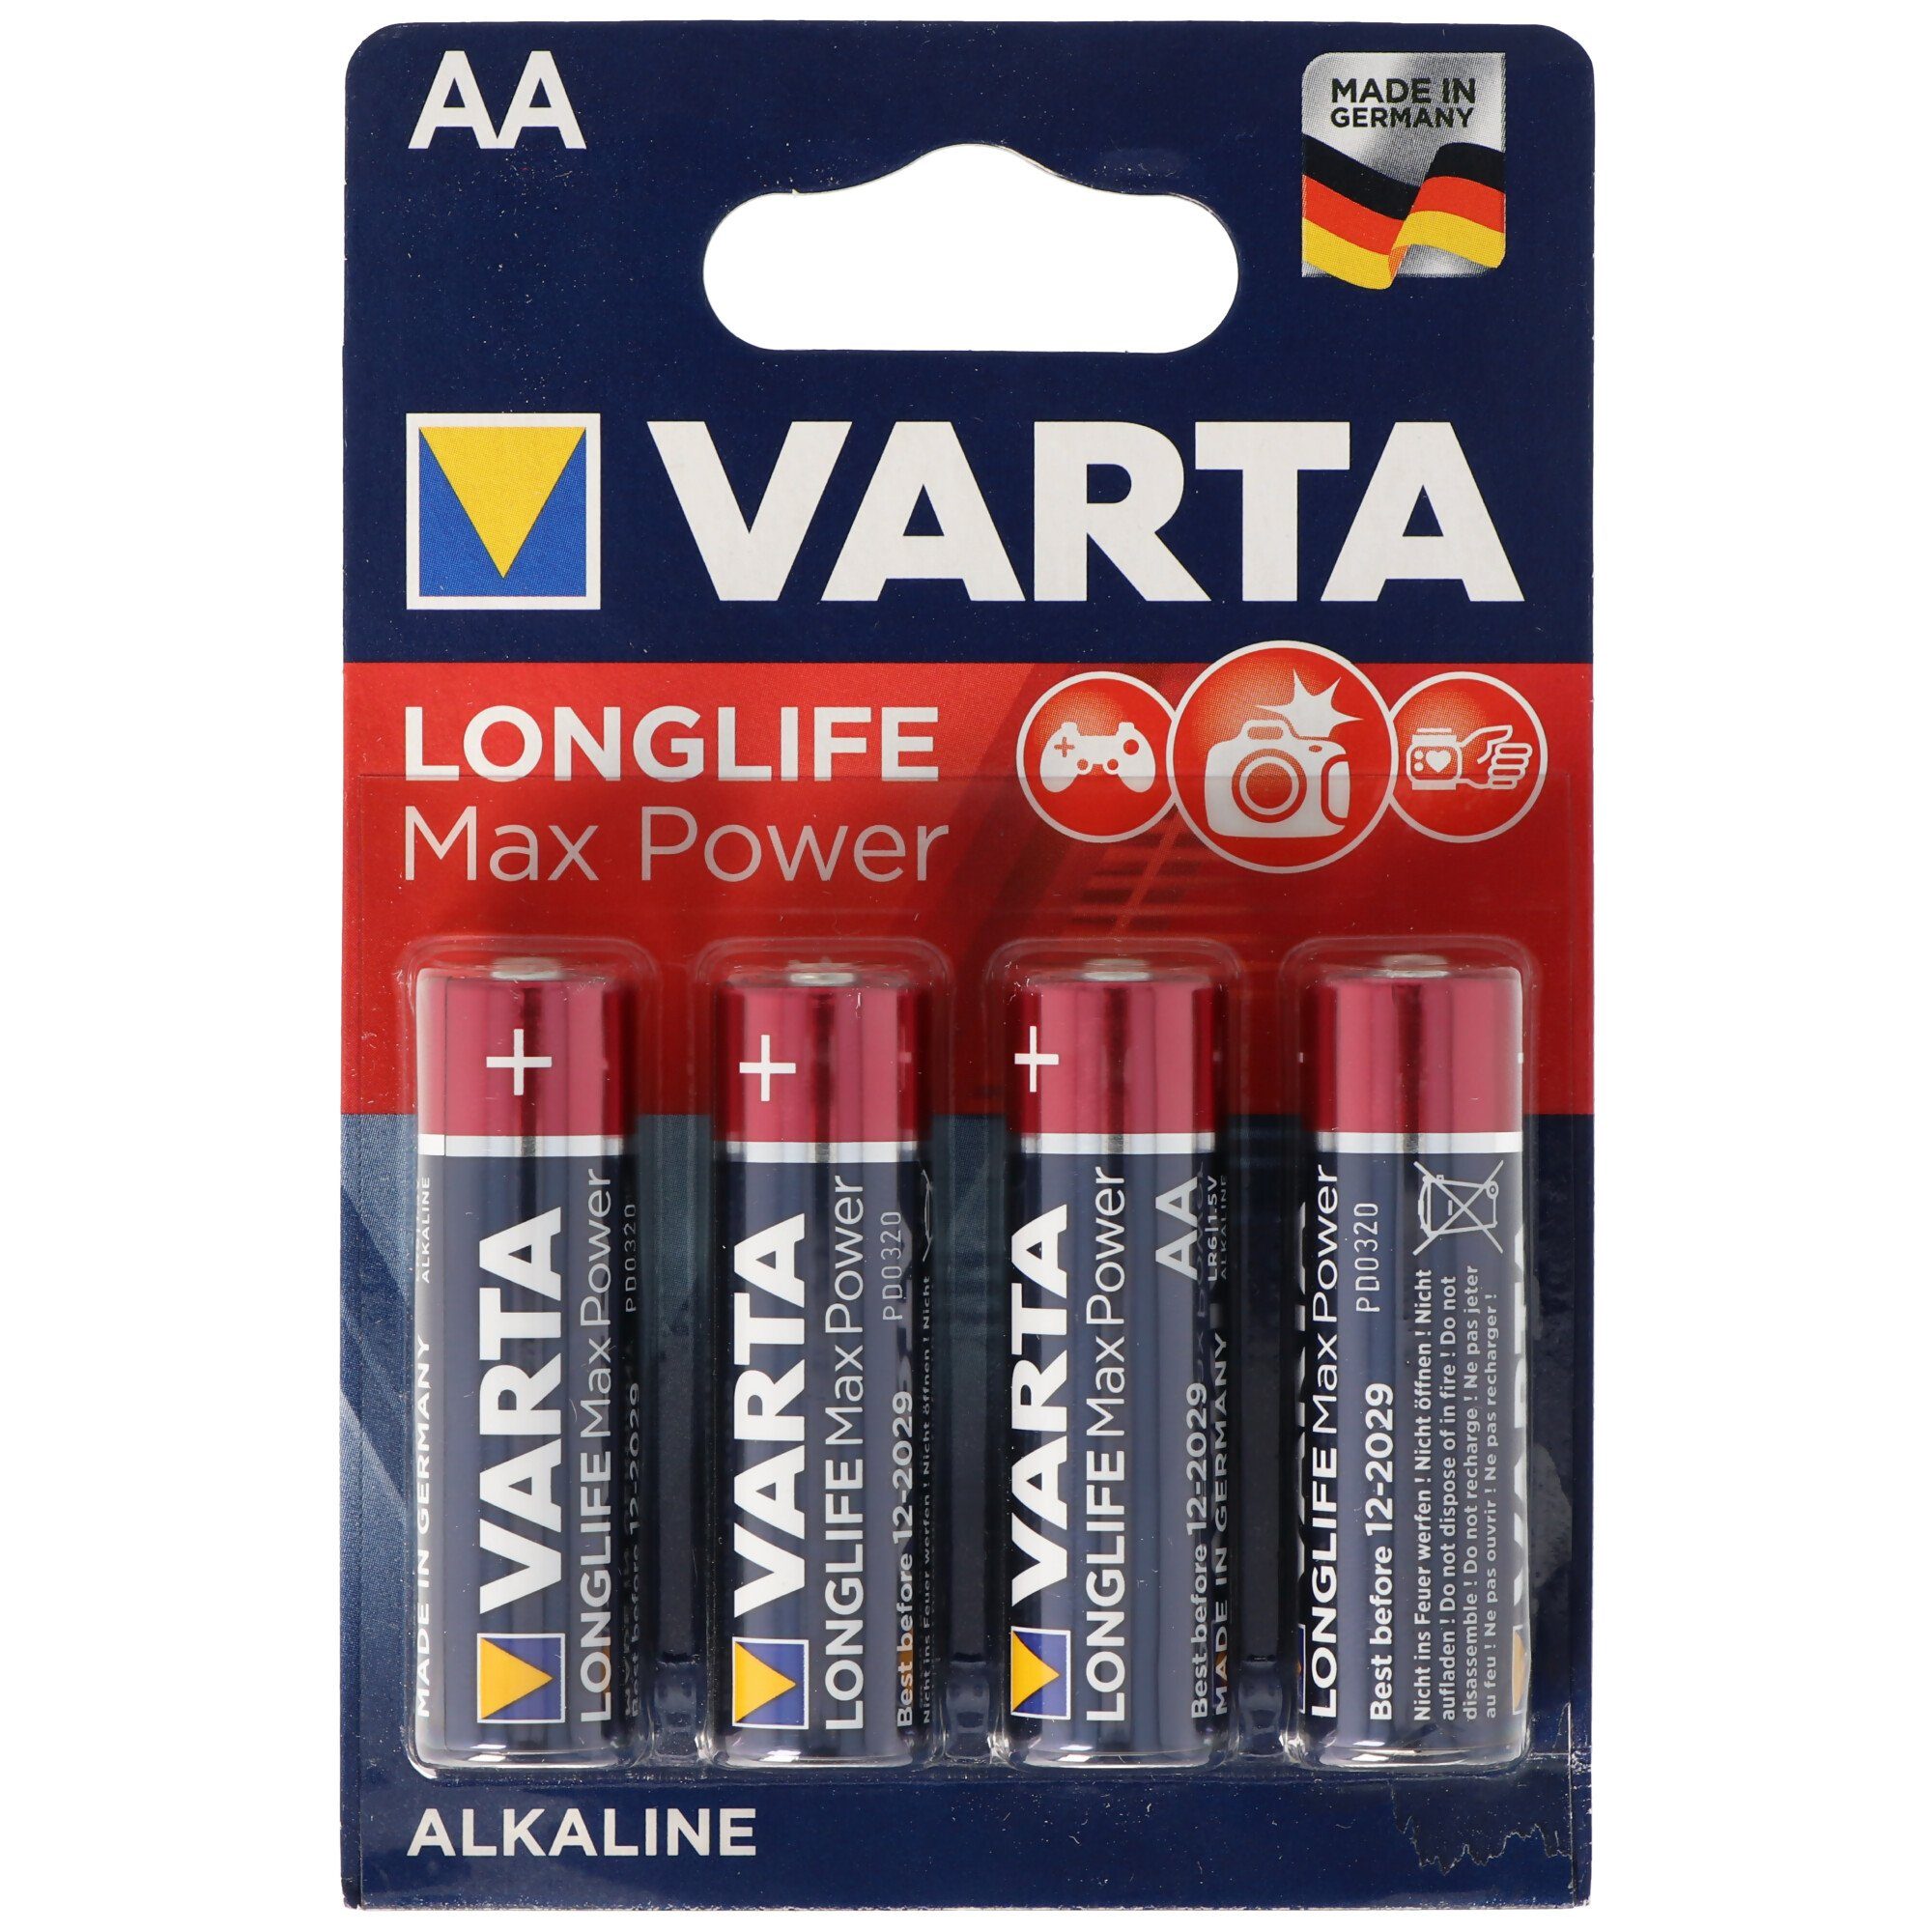 VARTA Varta Longlife Max Power (ehem. Max-Tech) 4706 Mignon AA 4-er Blister Batterie, (1,5 V)